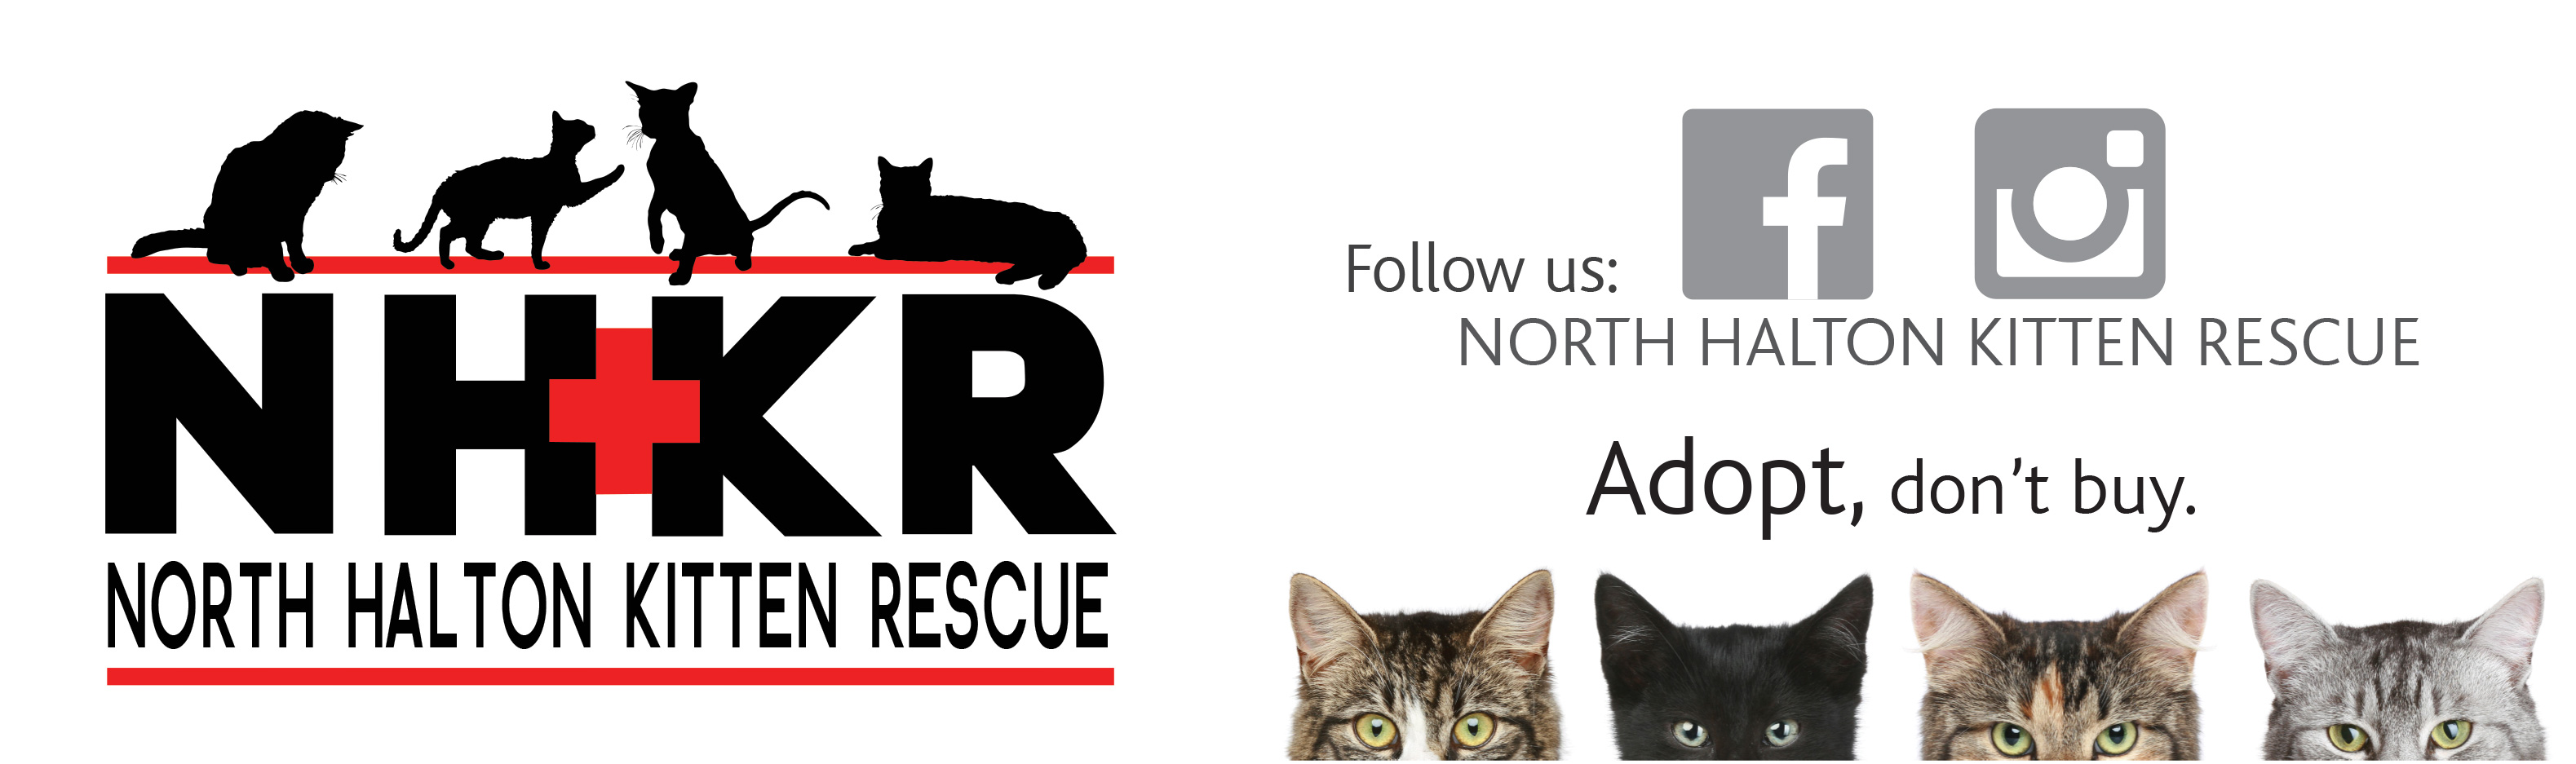 North Halton Kitten Rescue